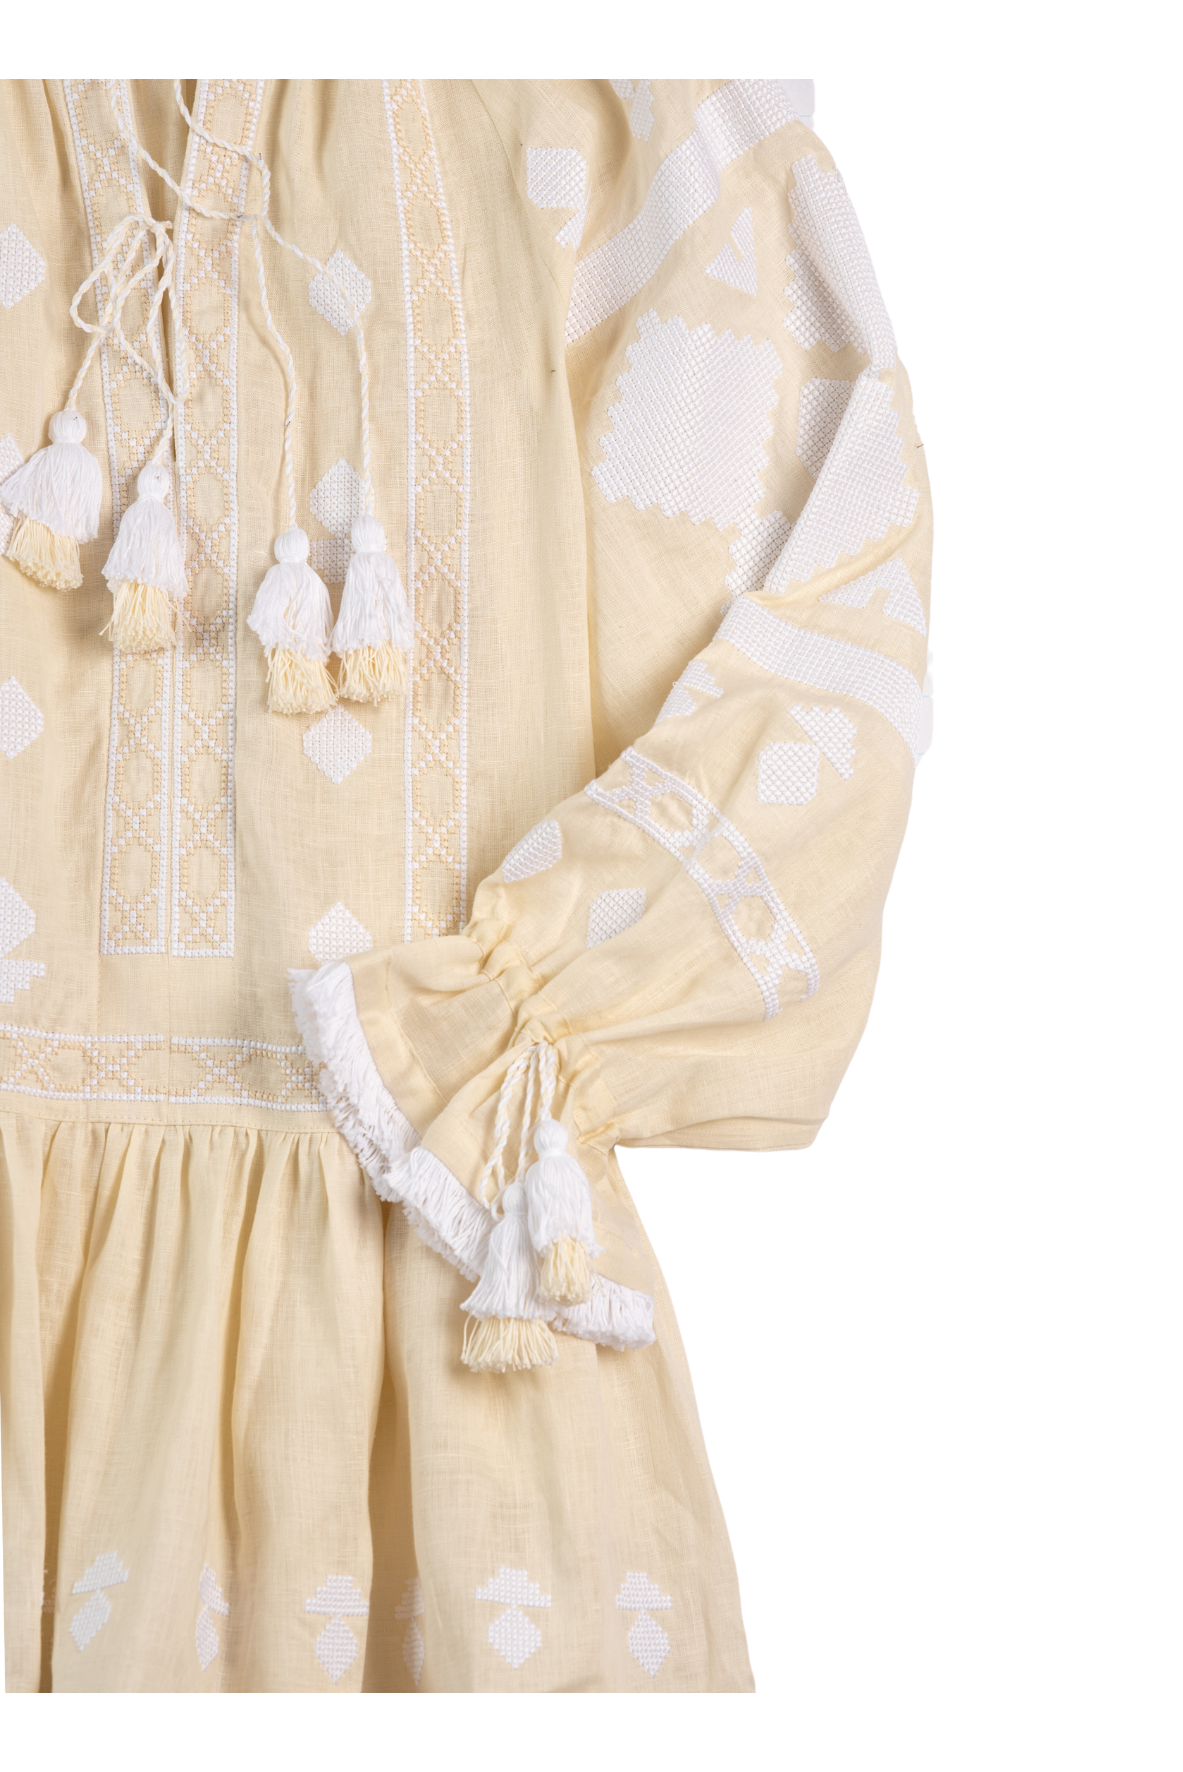 Nomeda Embroidered Ukrainian Dress Pre-Order- Ivory, White by Larkin Lane